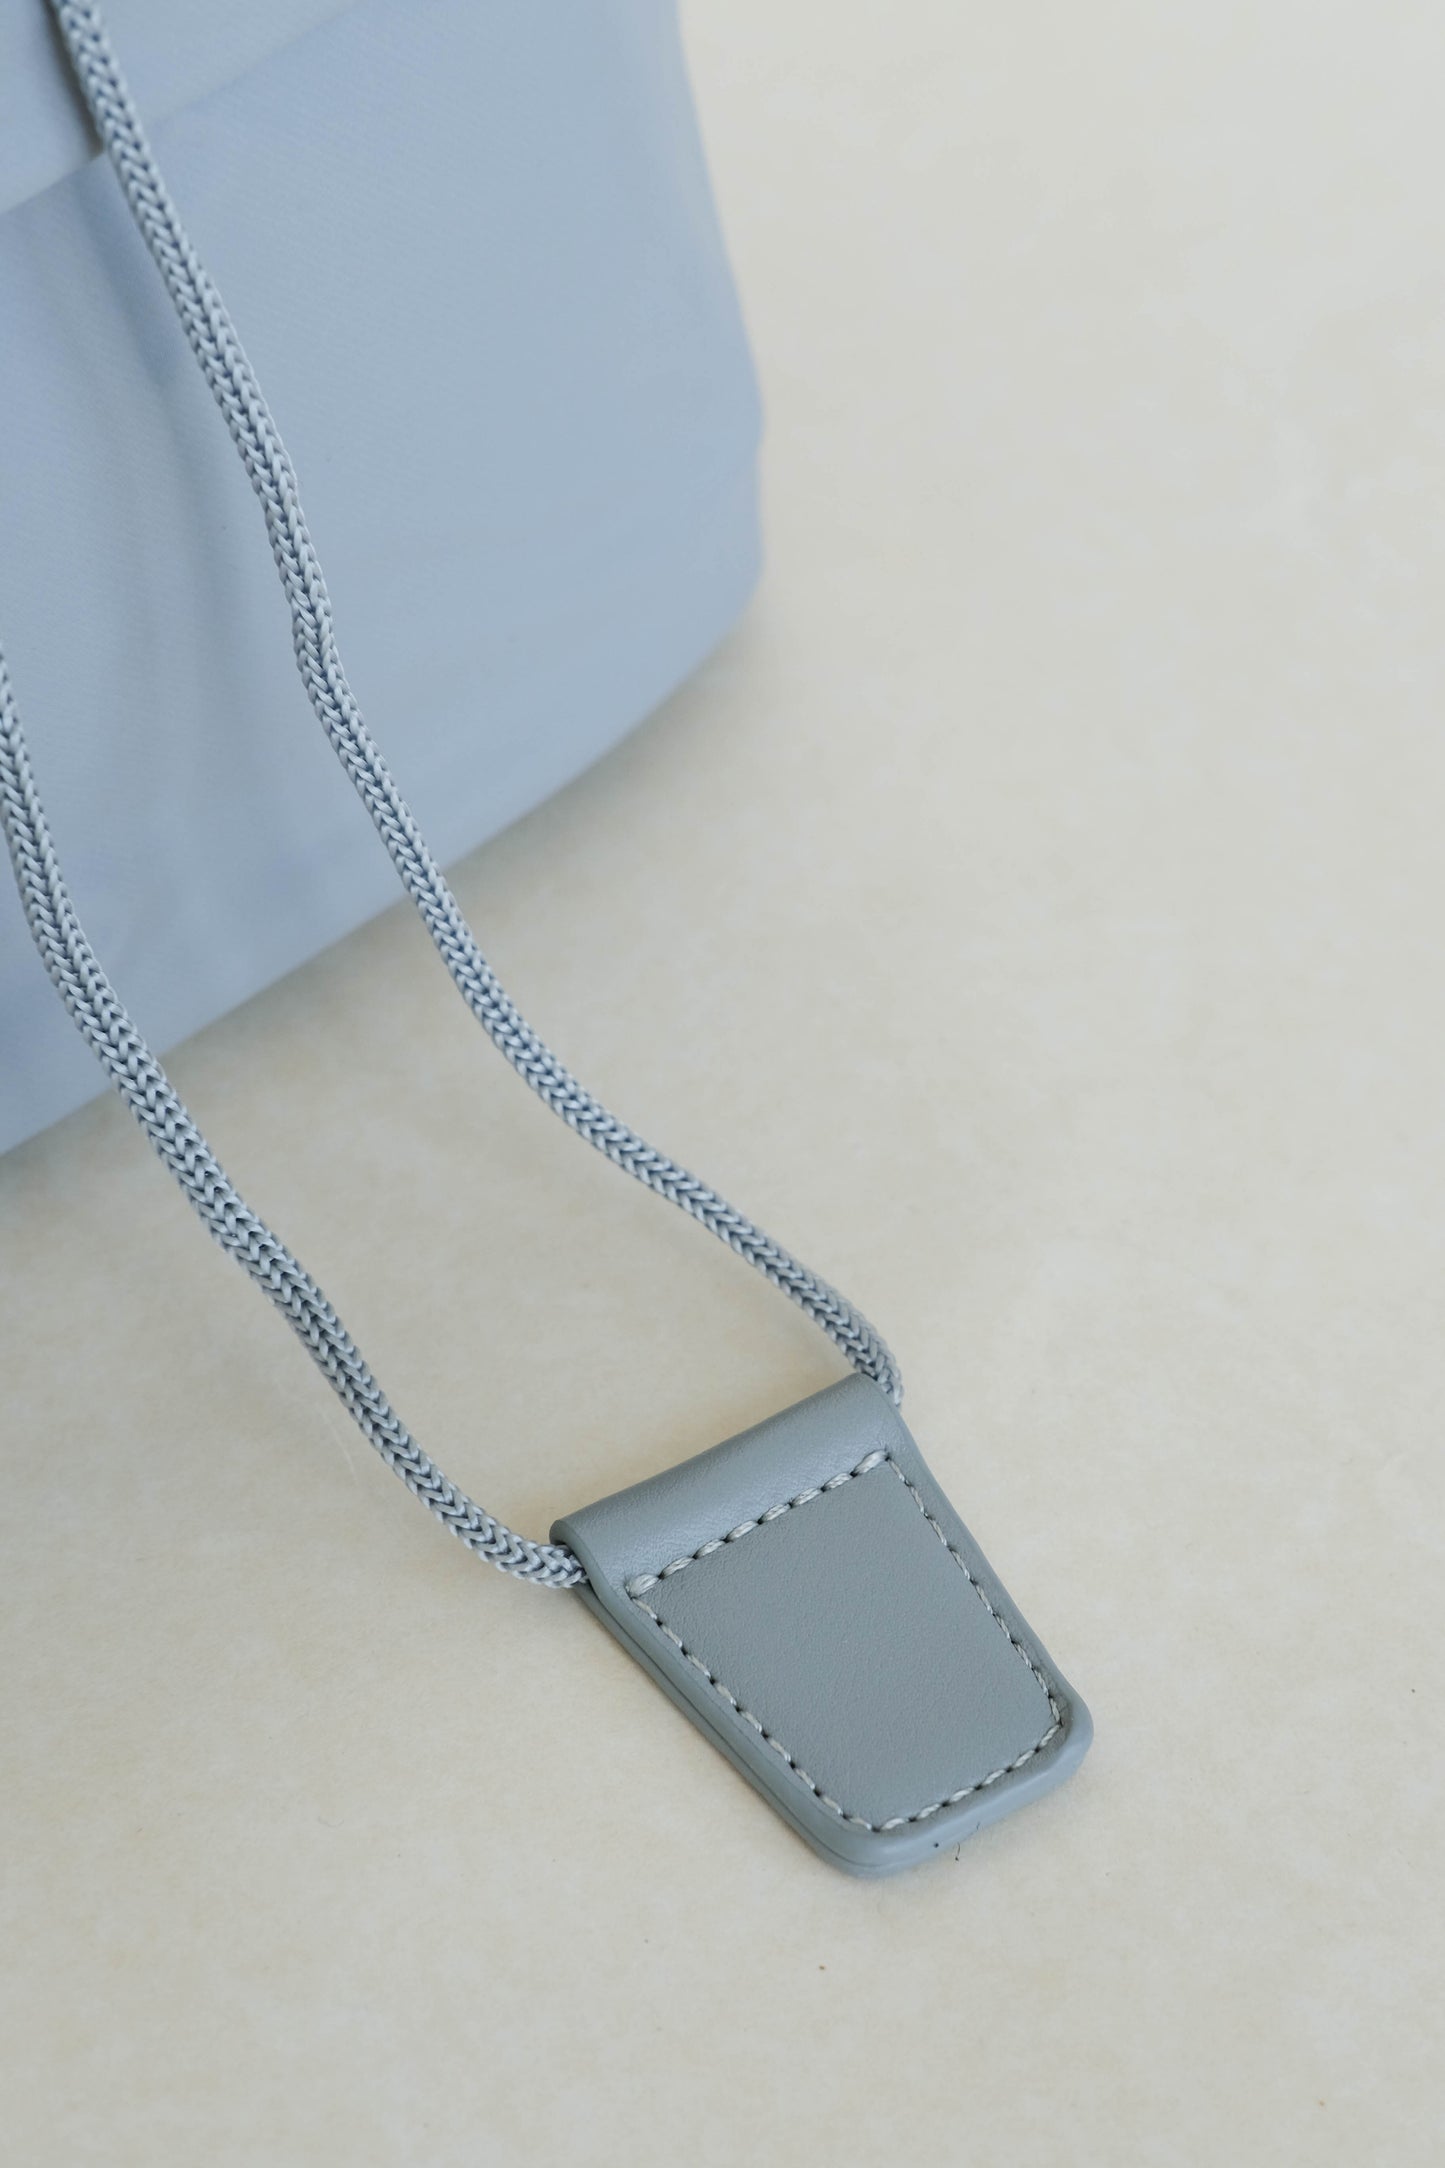 Japanese nylon bucket shoulder bag in grey blue